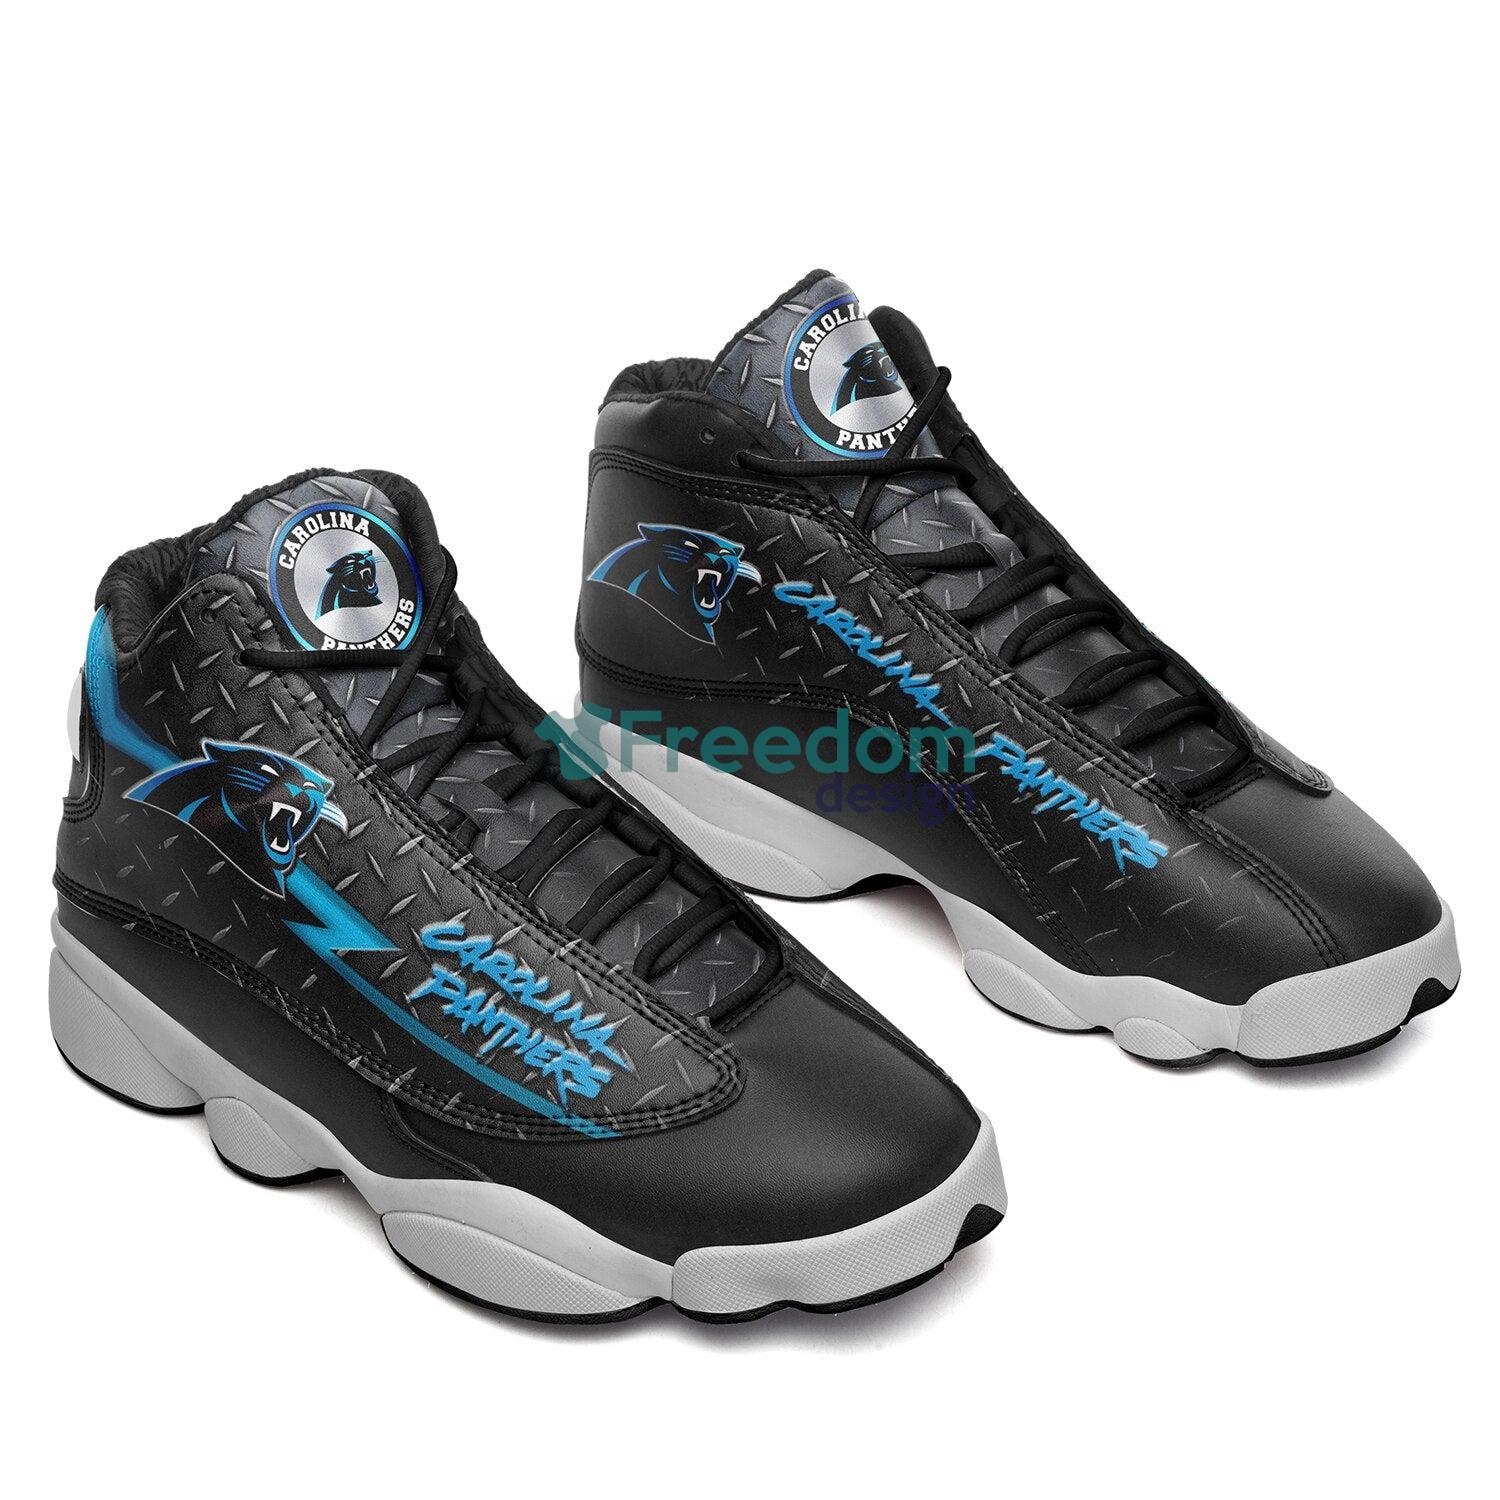 Carolina Panthers Team Air Jordan 13 Sneaker Shoes